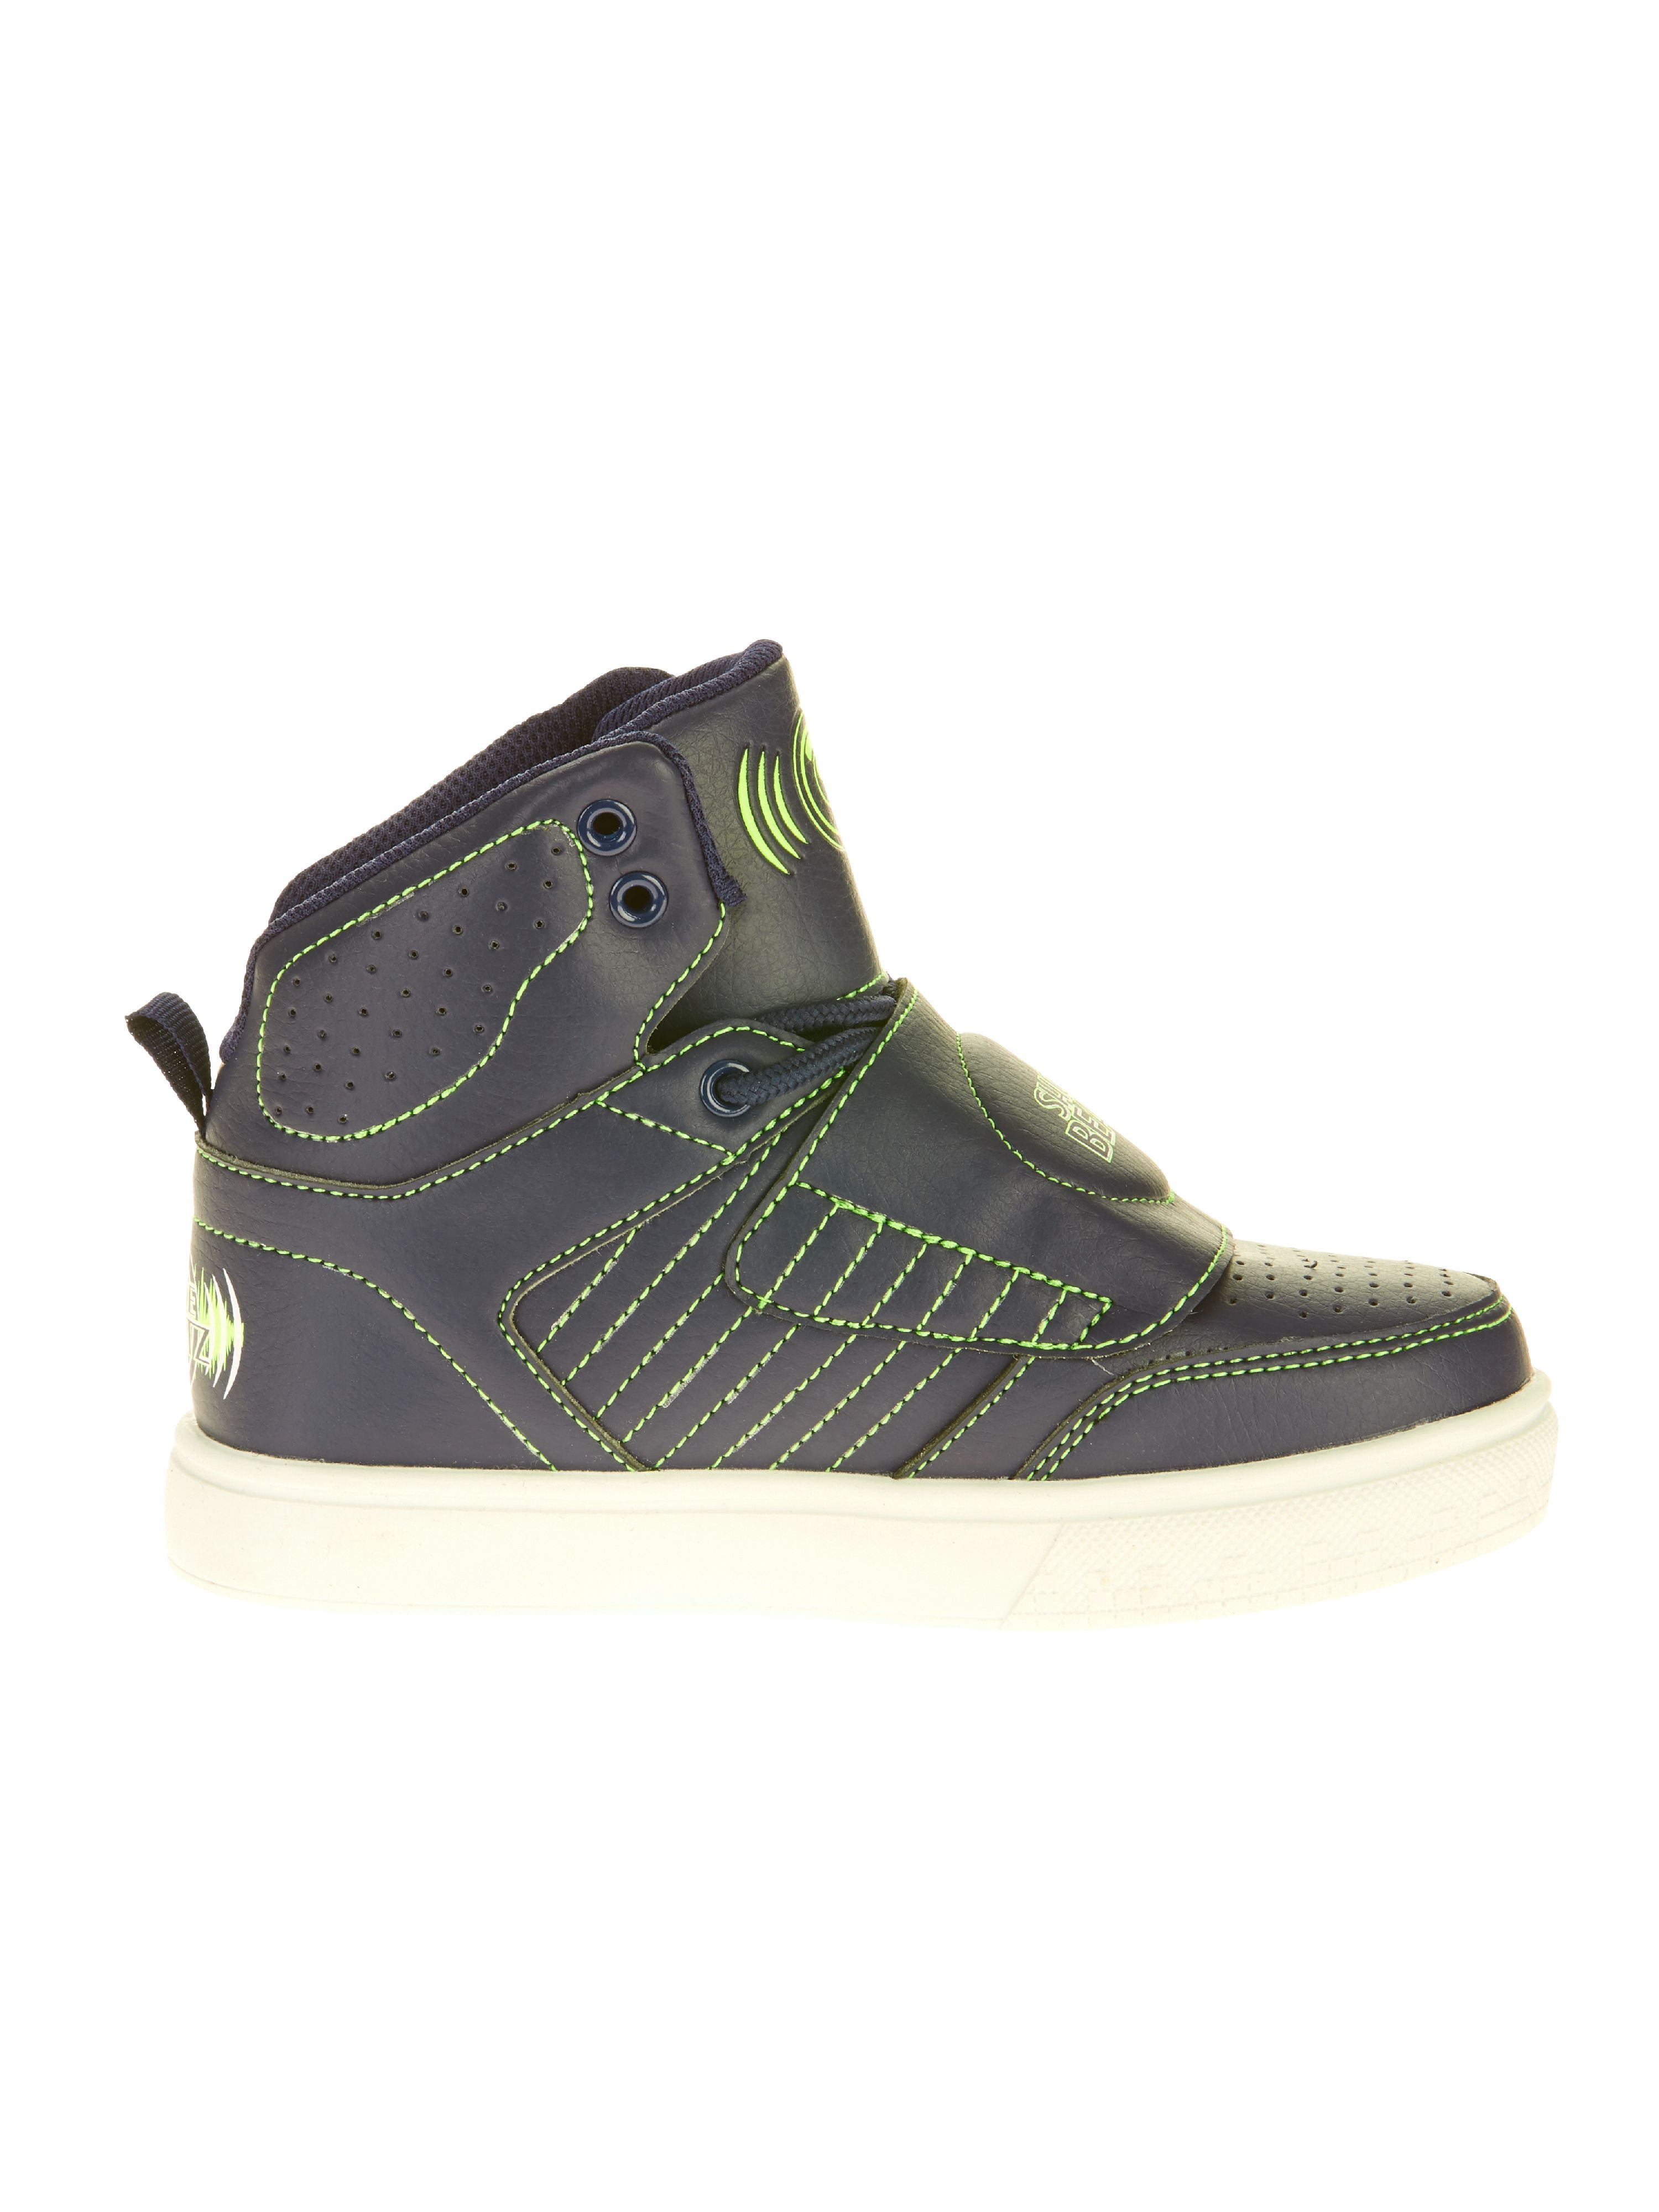 Shoe Beatz Kids High Tops Athletic Shoes Sz 4 Rechargeable Bluetooth Blue/Green 